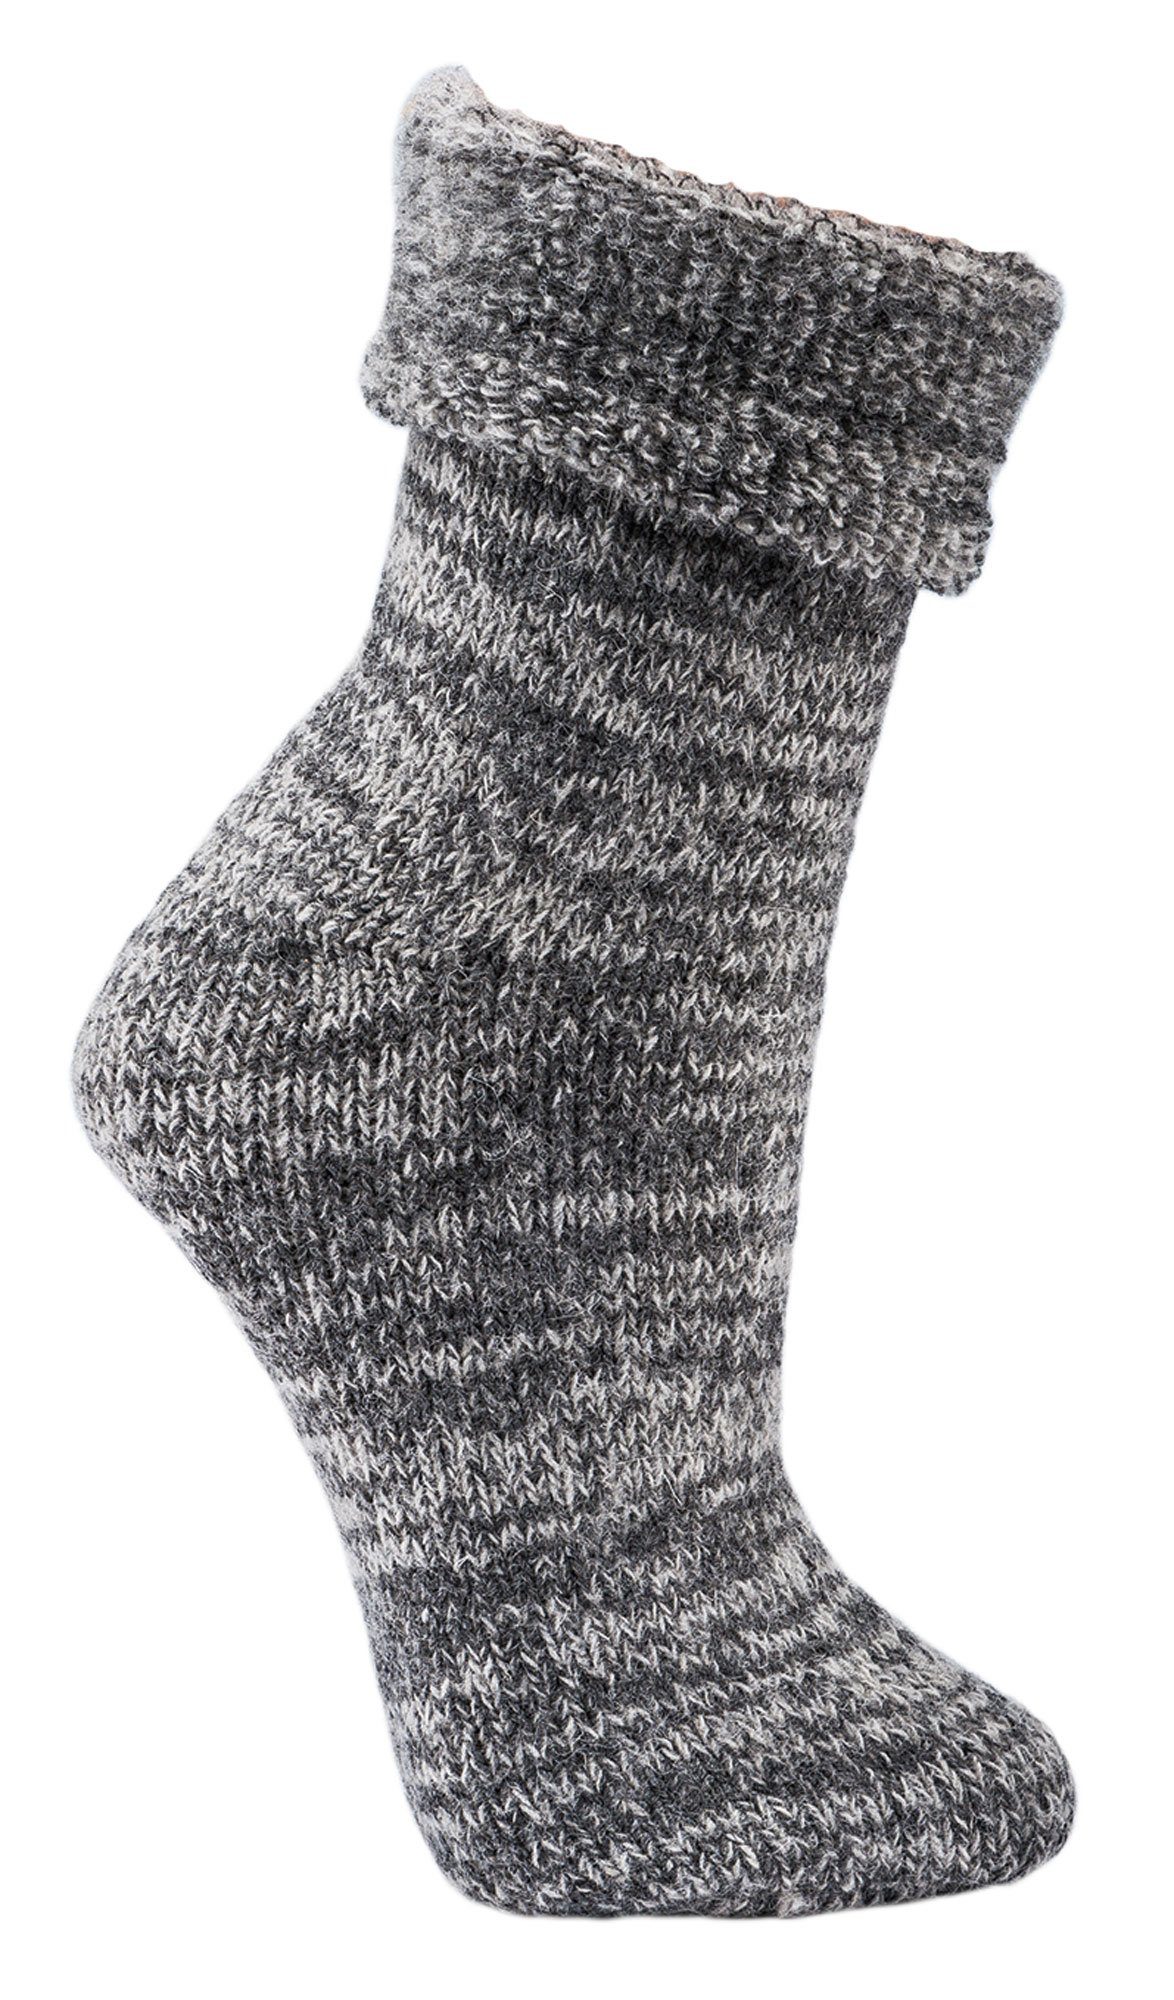 Wowerat Socken MEGA warme Socken 63% Wolle Thermosocken Homesocks (1 Paar) extra dick graumelange